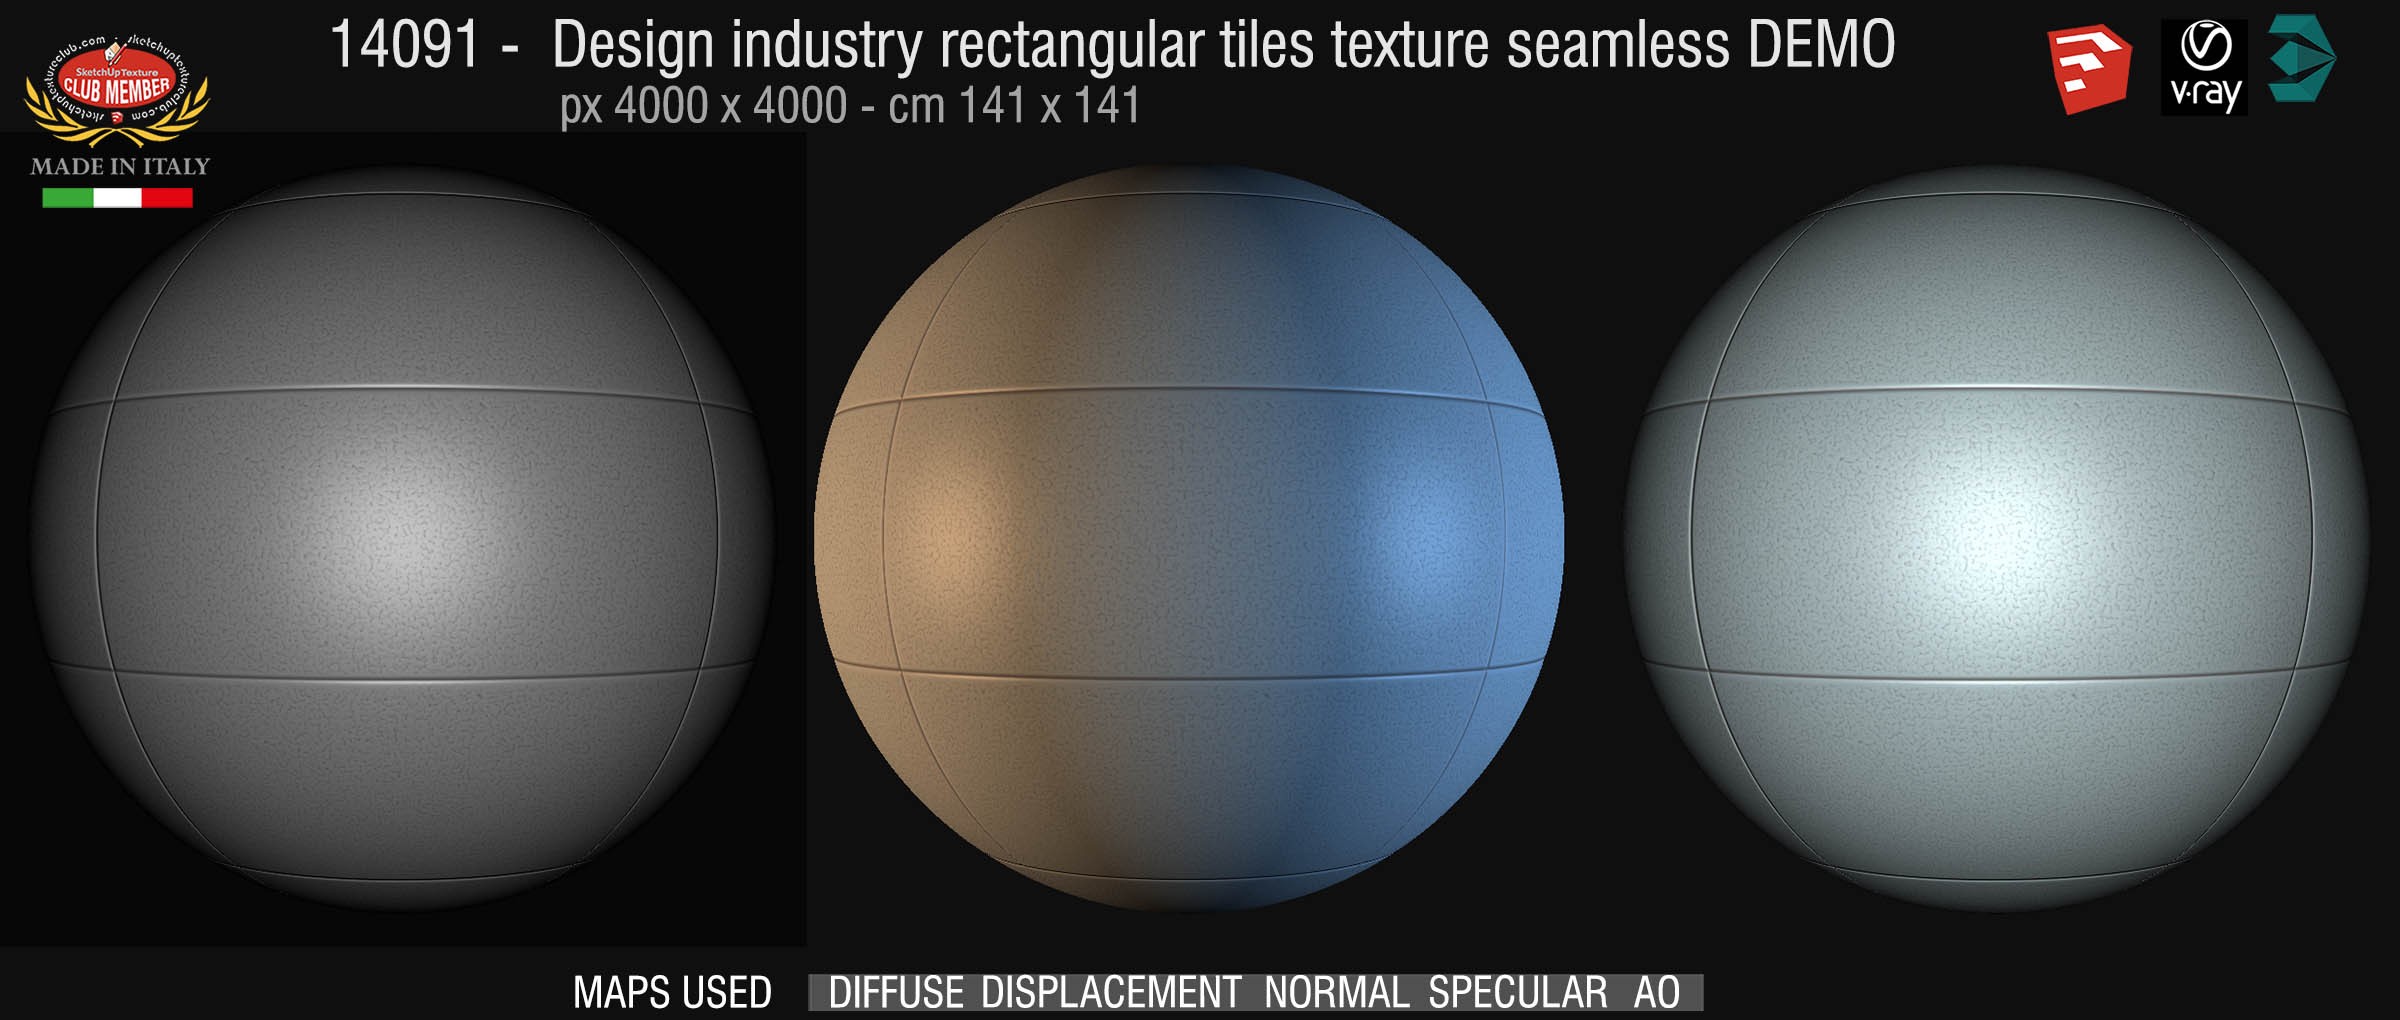 14091 Design industry rectangular tile texture seamless + maps DEMO